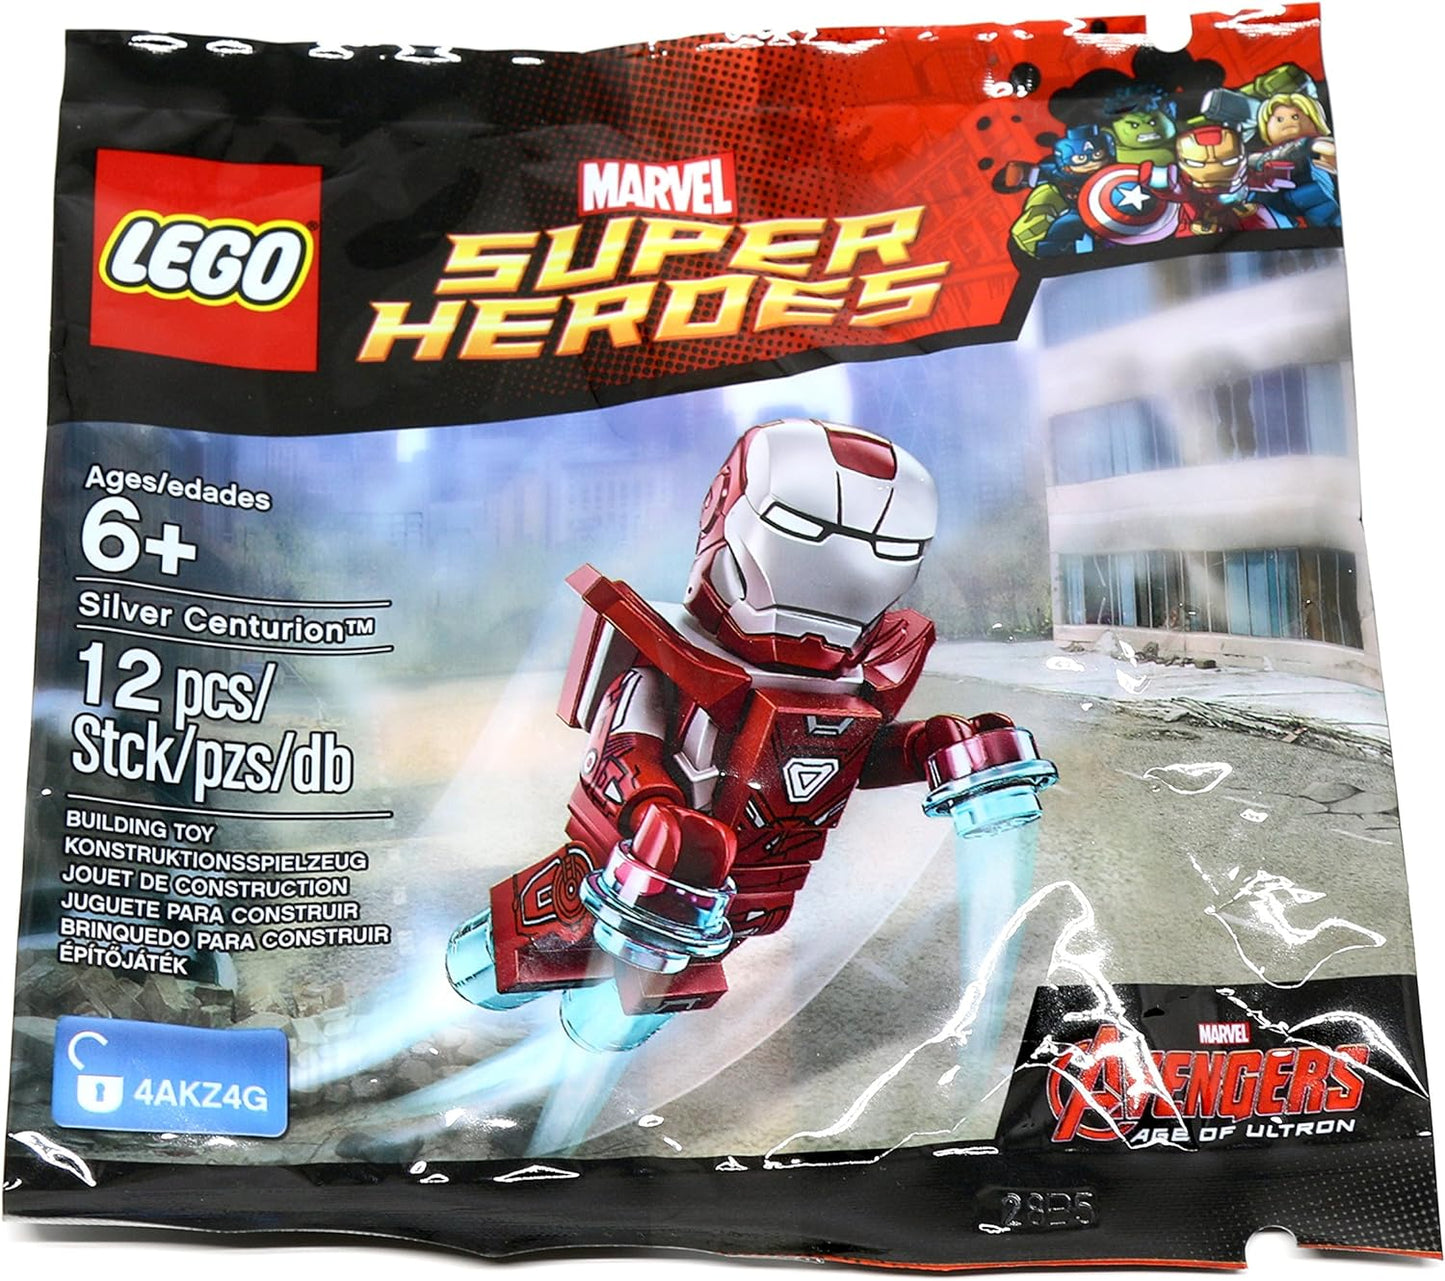 LEGO Super Heroes: Silver Centurion Exclusive Minifigure - Iron Man Mark 33 Armor